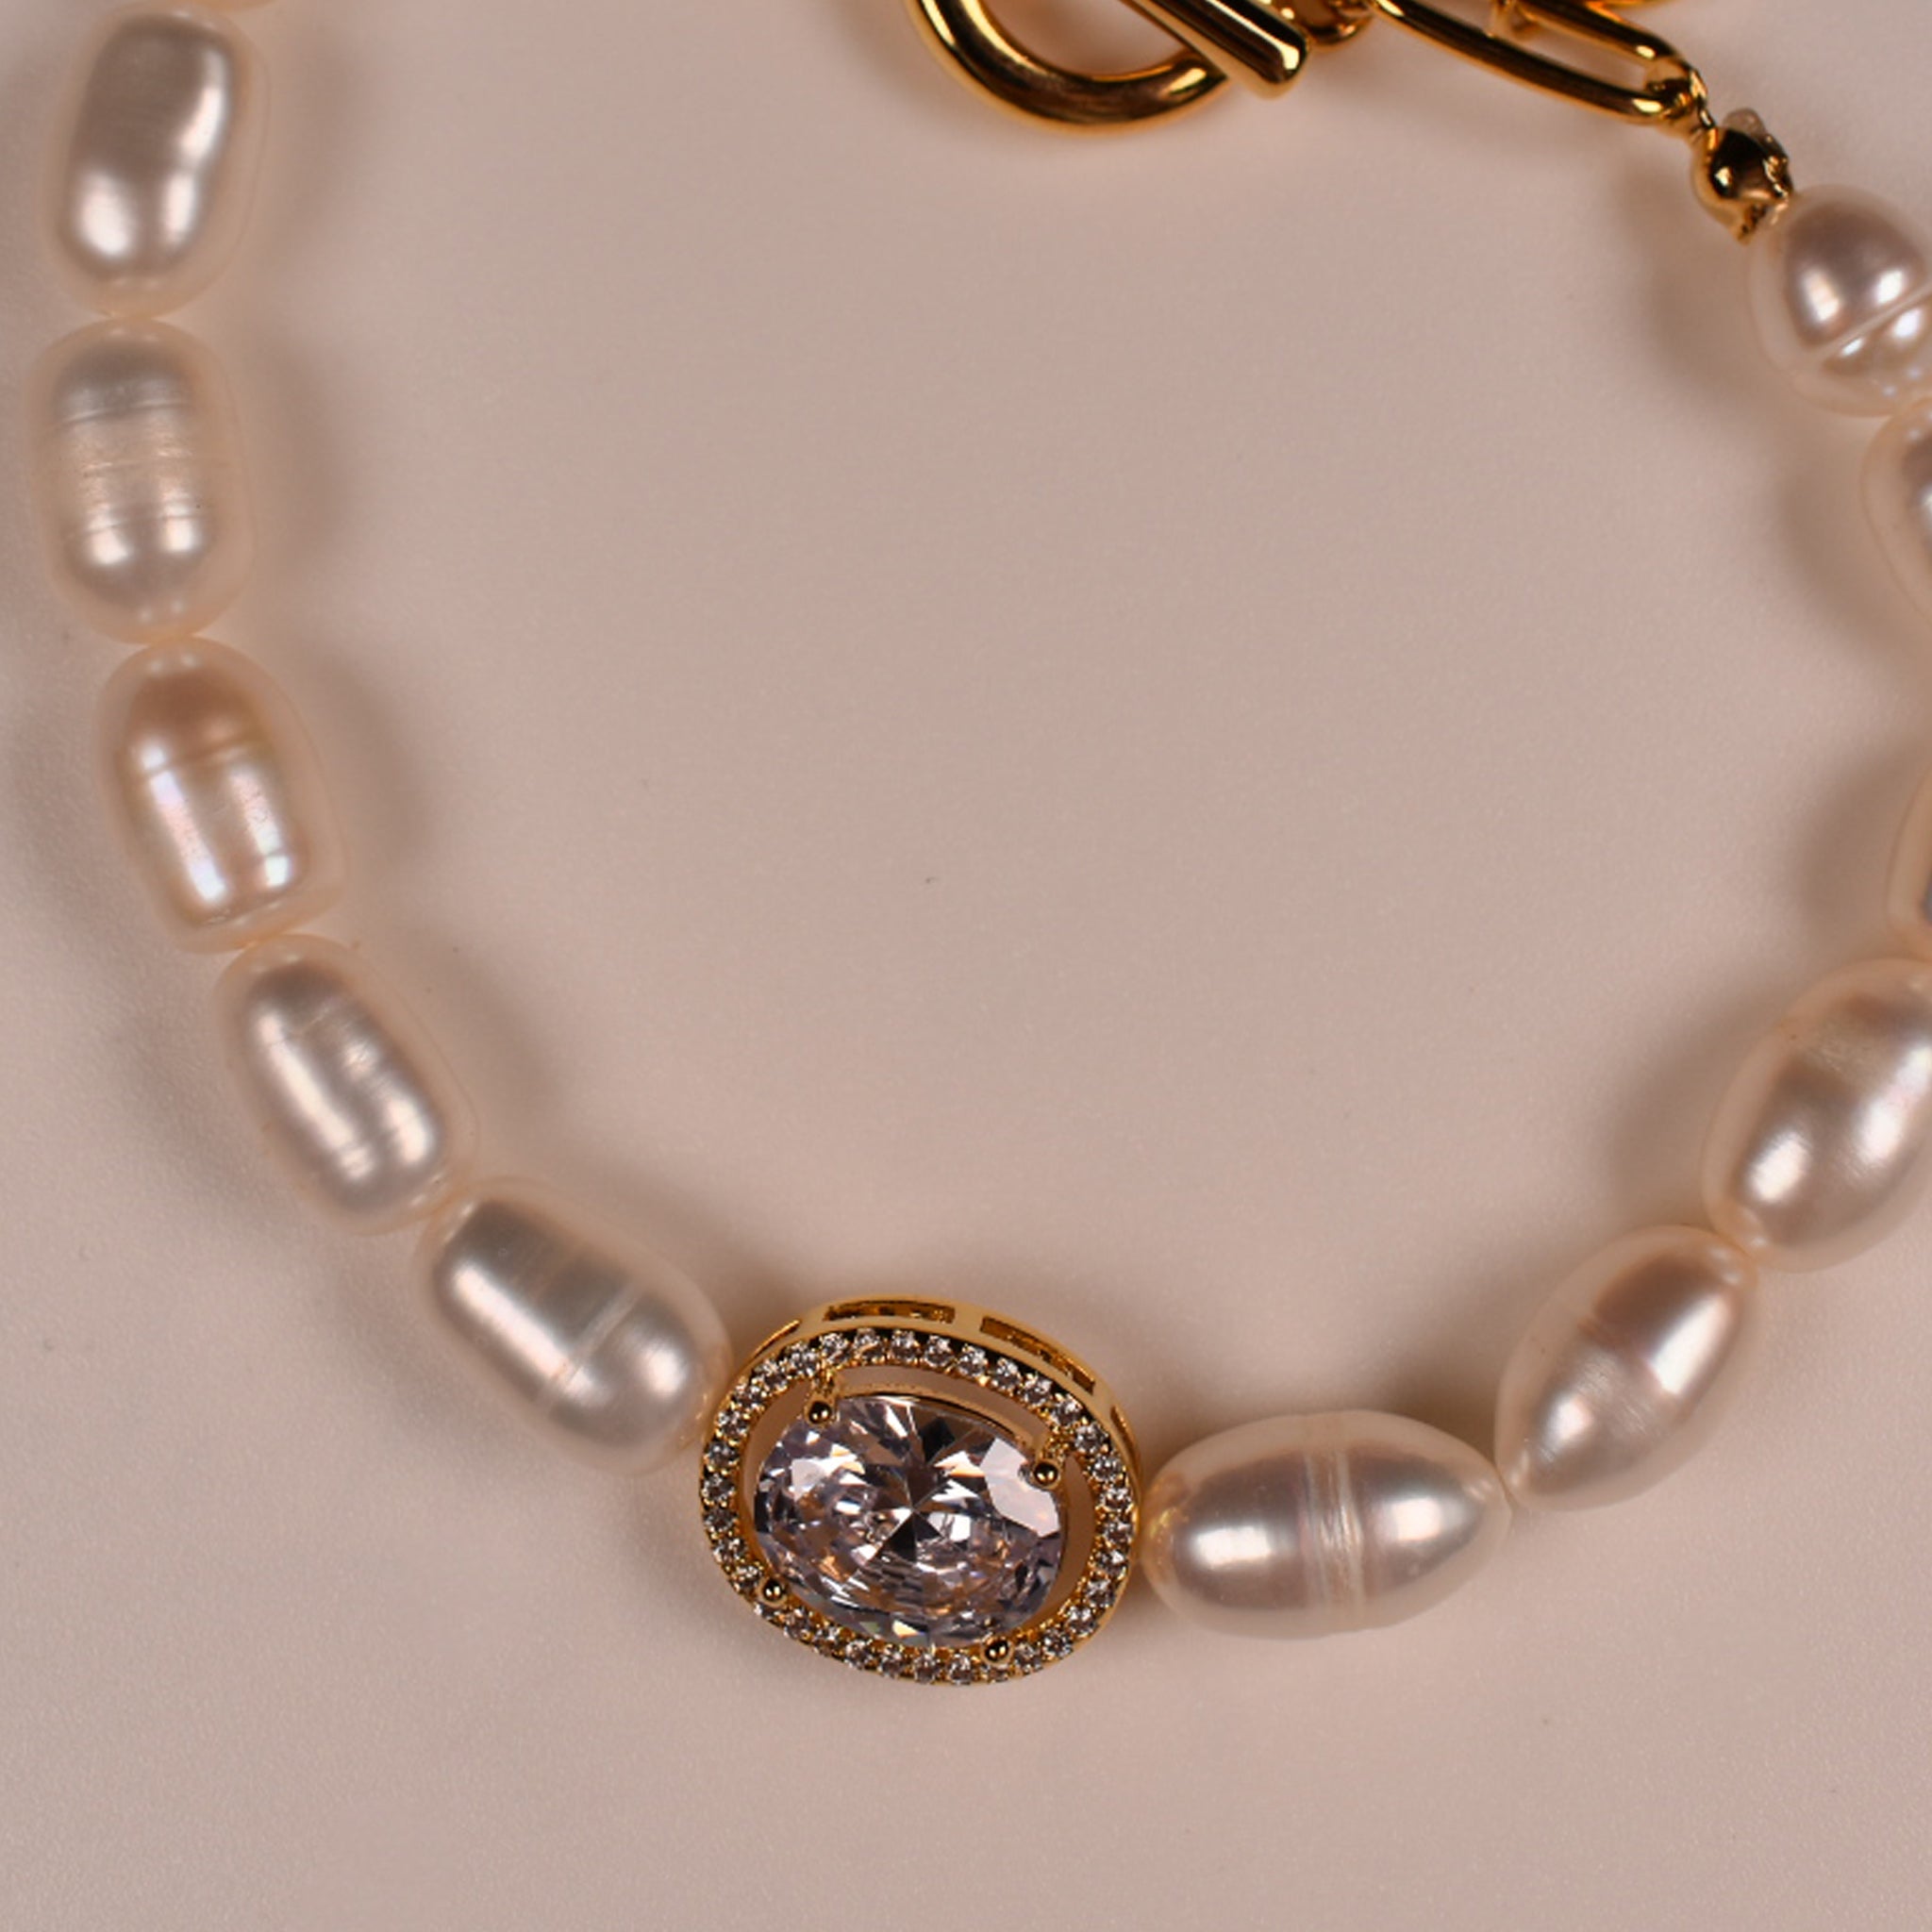 Pearls of Korea - The Zelta Pearl Bracelet